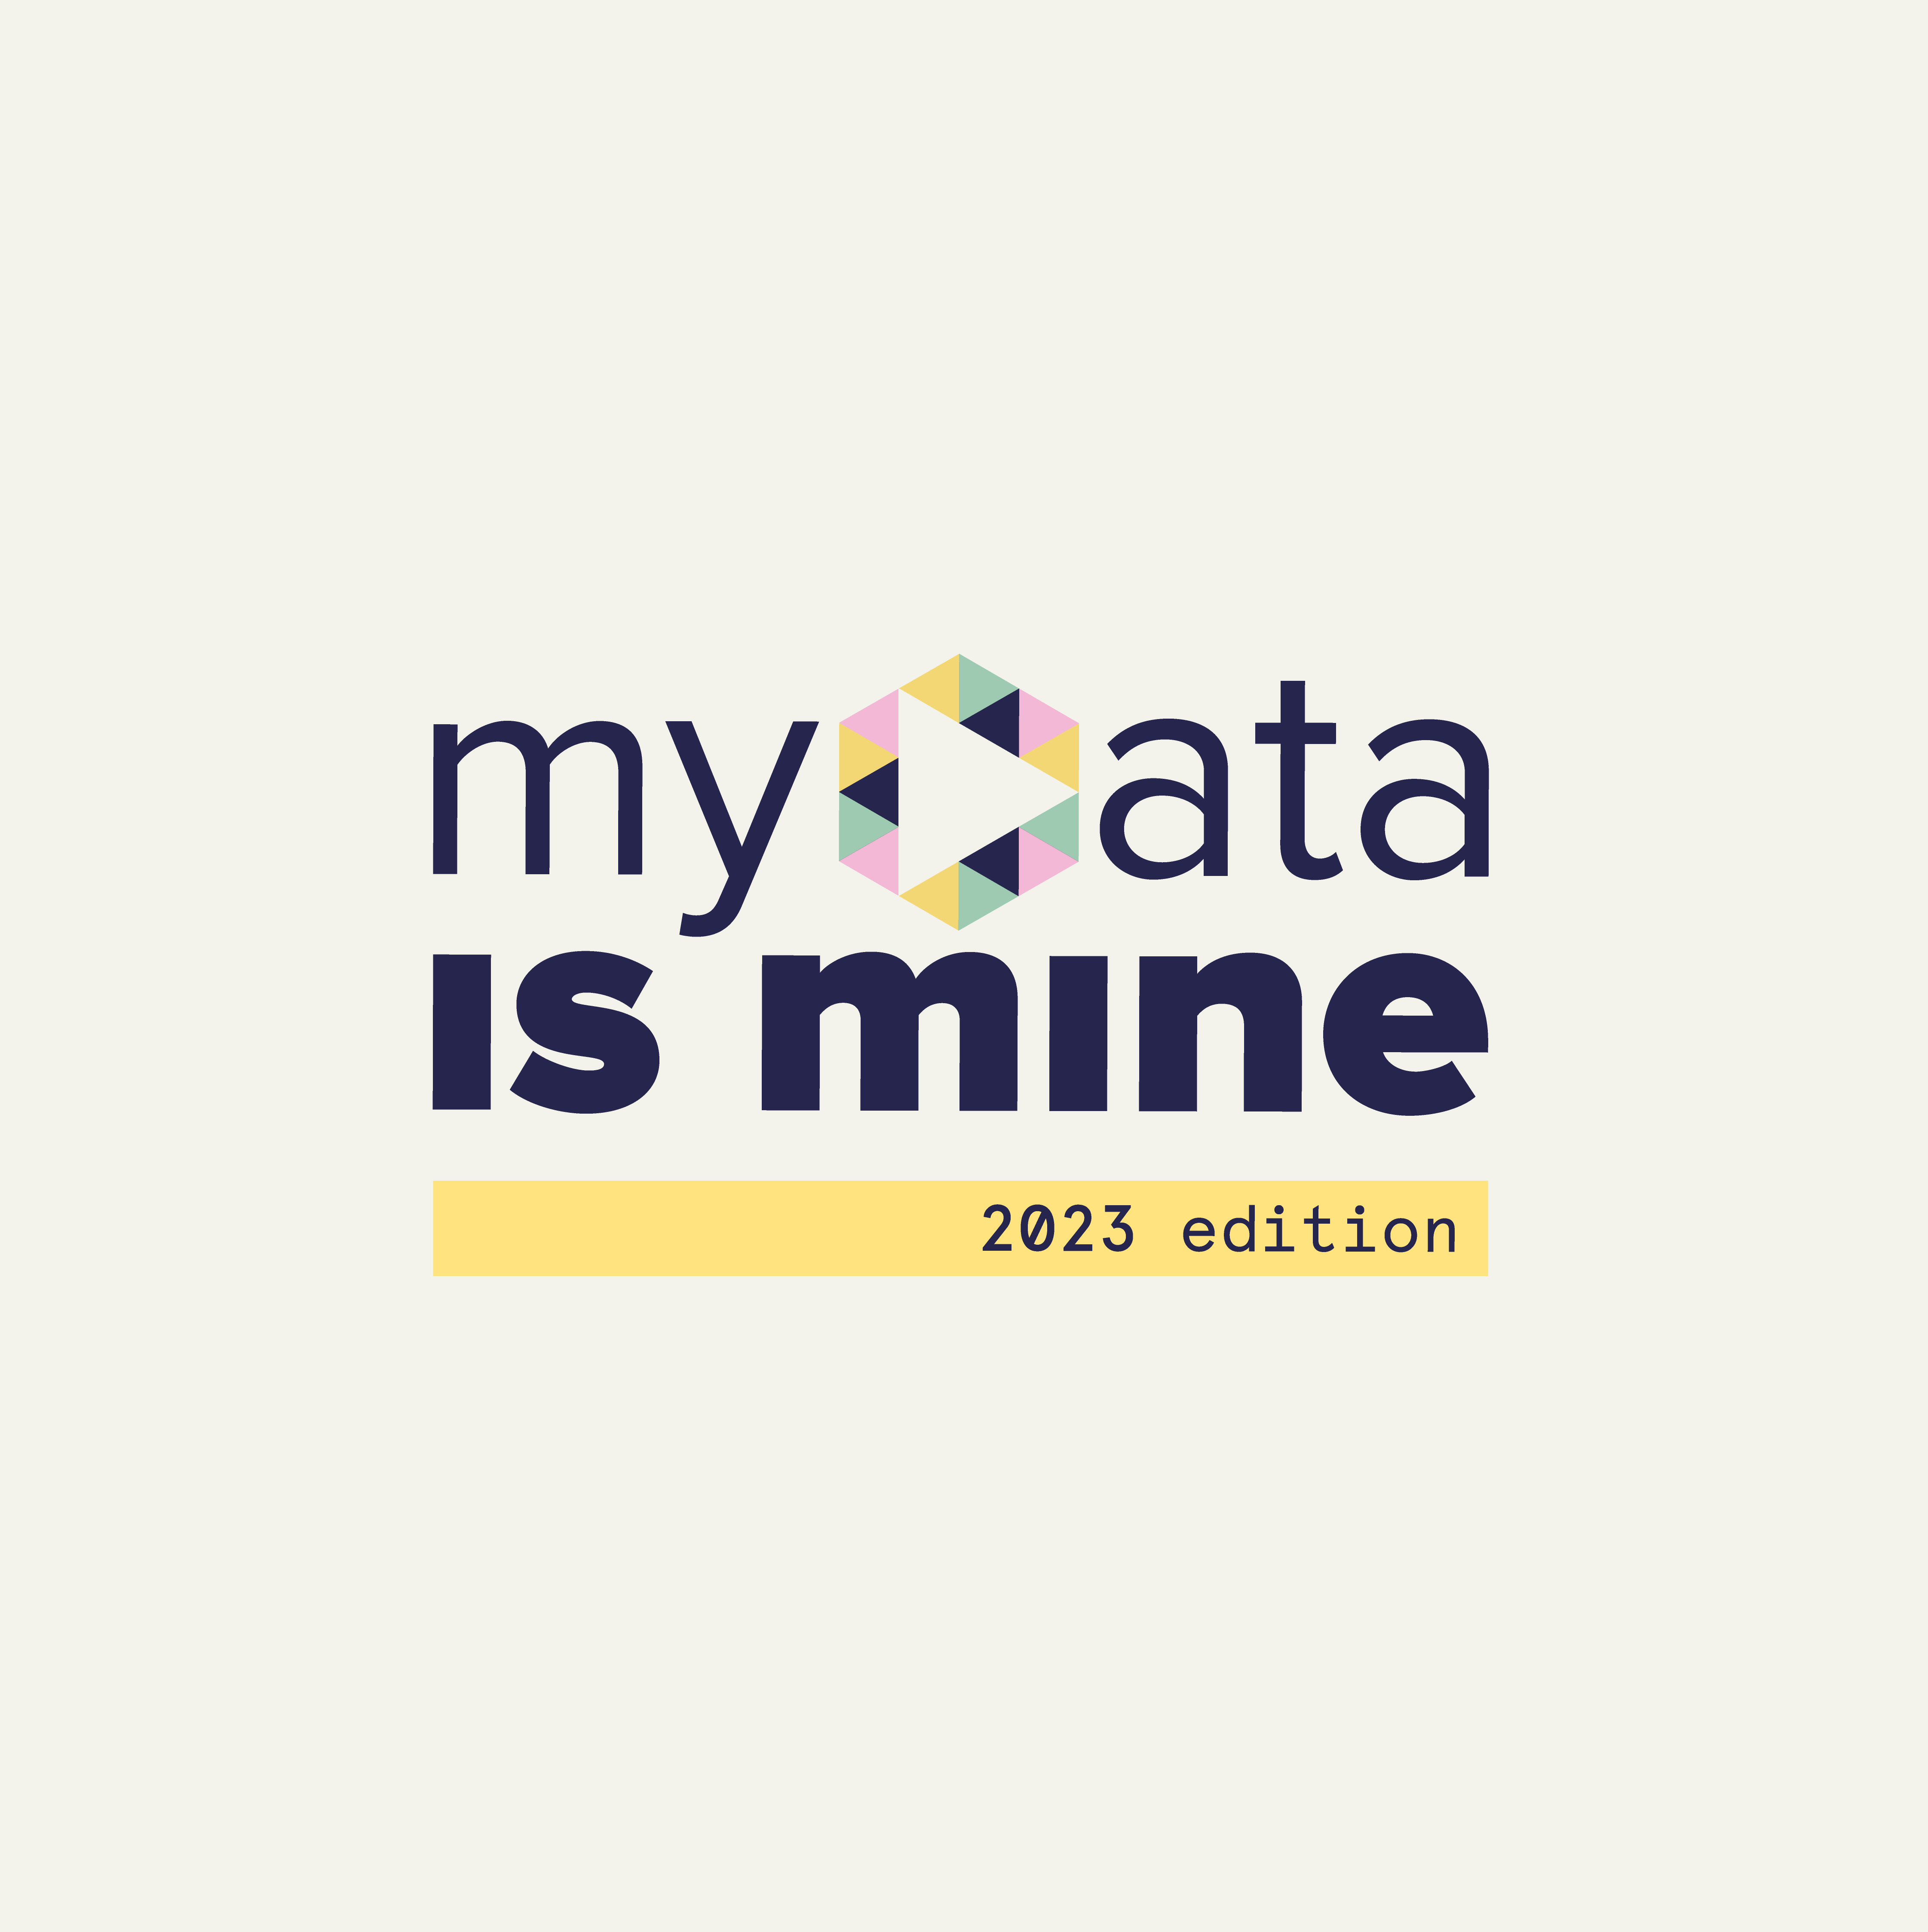 my data is mine logo 2023